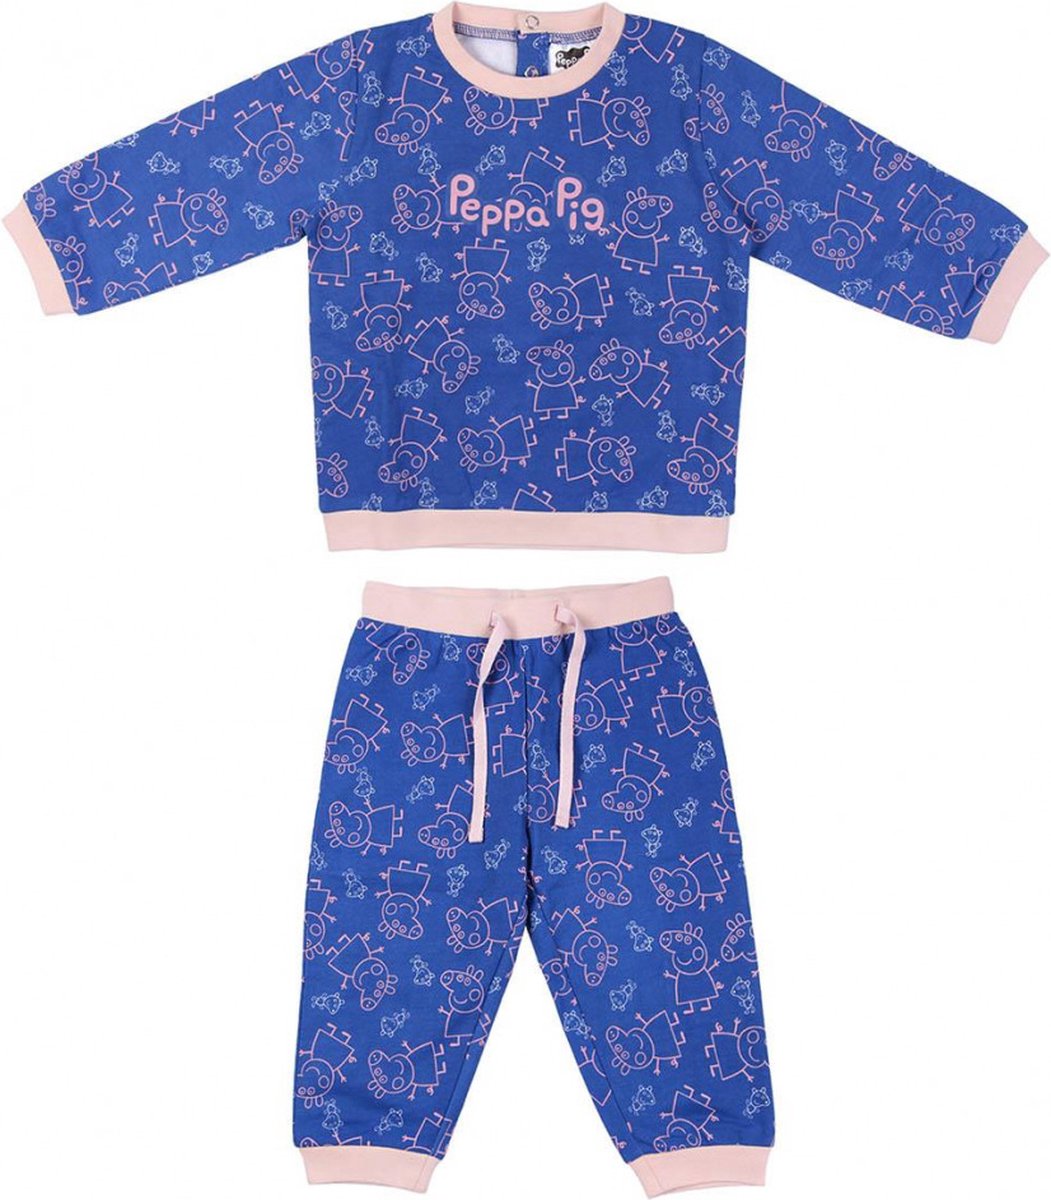 Original Peppa Pig trainingspak newborn kledingset - baby kids - maat 80 cm - 18 maanden - katoen set broekje trui Premium